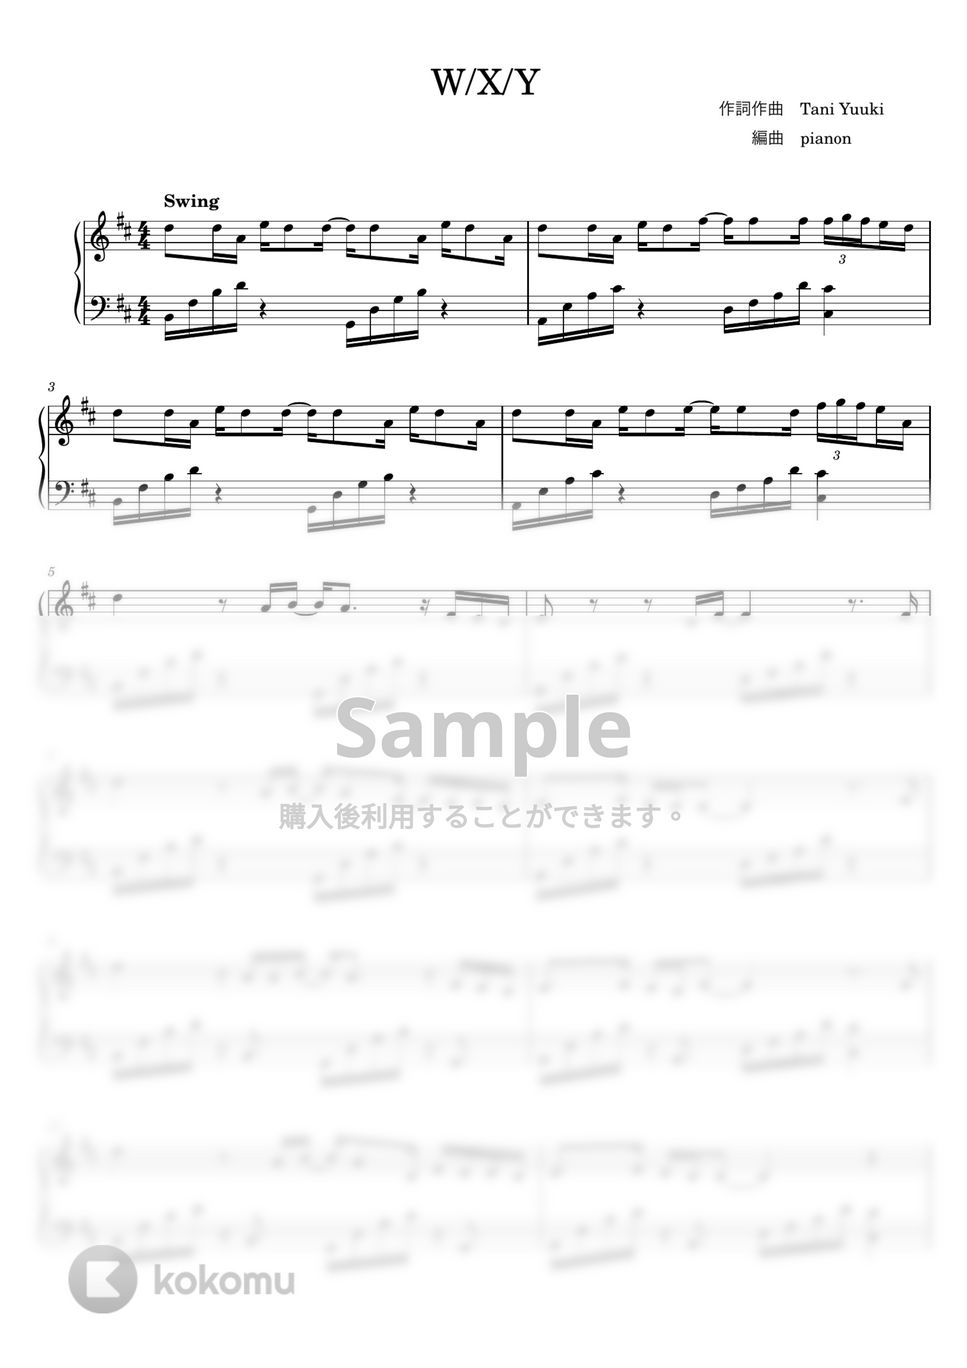 Tani Yuuki - W/X/Y (ピアノ上級ソロ) by pianon